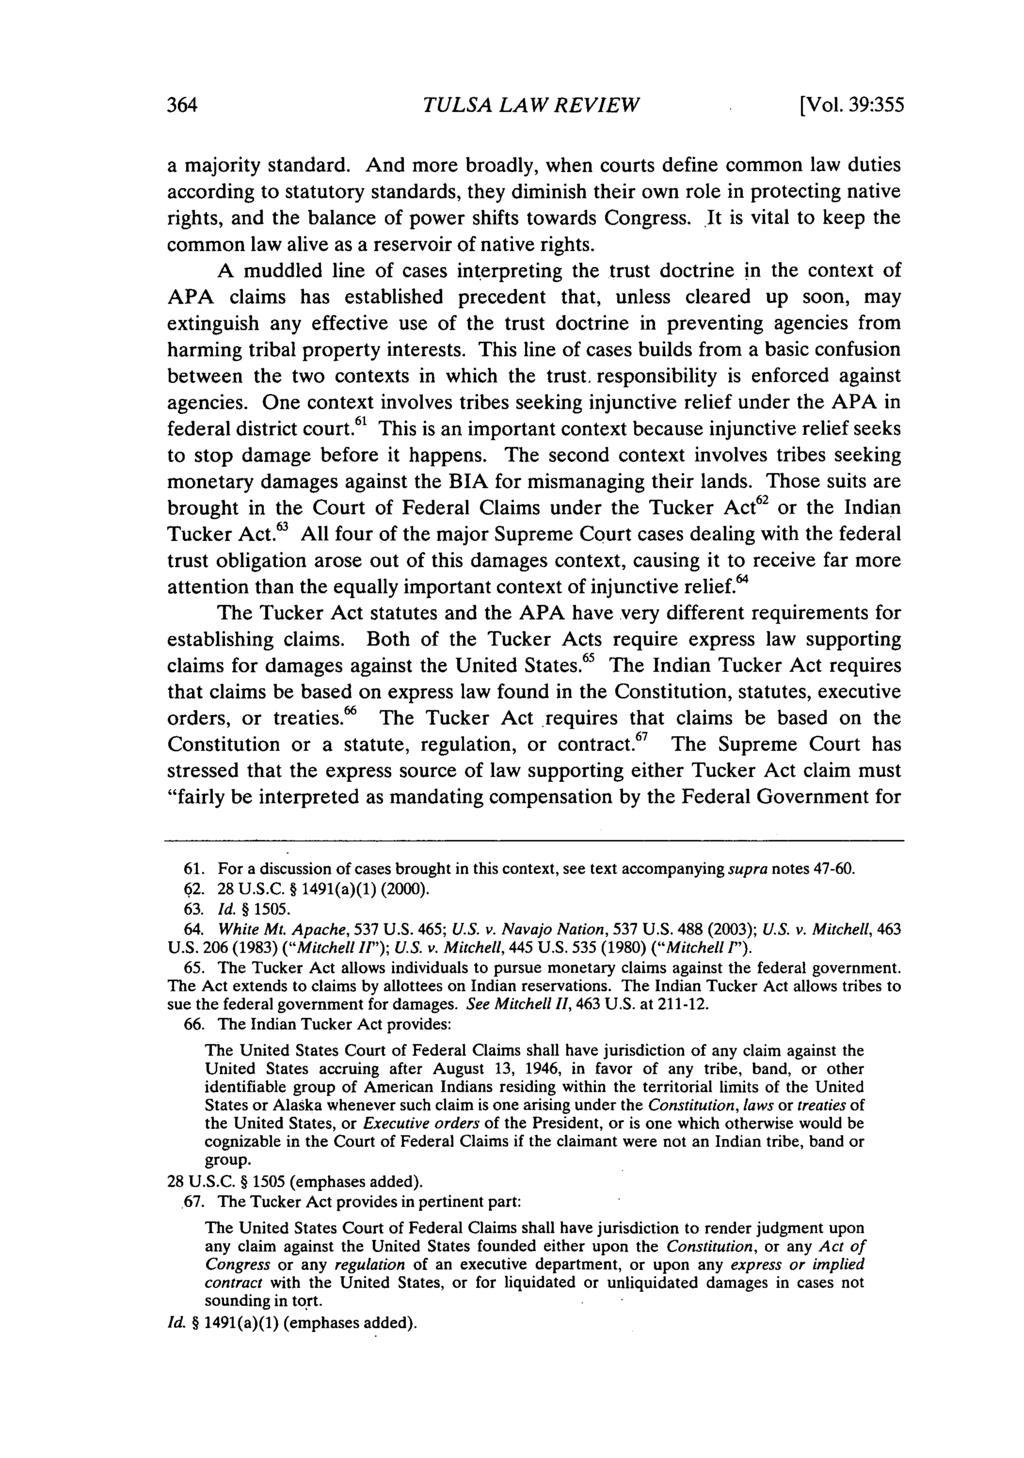 Tulsa Law Review, Vol. 39 [2003], Iss. 2, Art. 5 TULSA LAW REVIEW [Vol. 39:355 a majority standard.